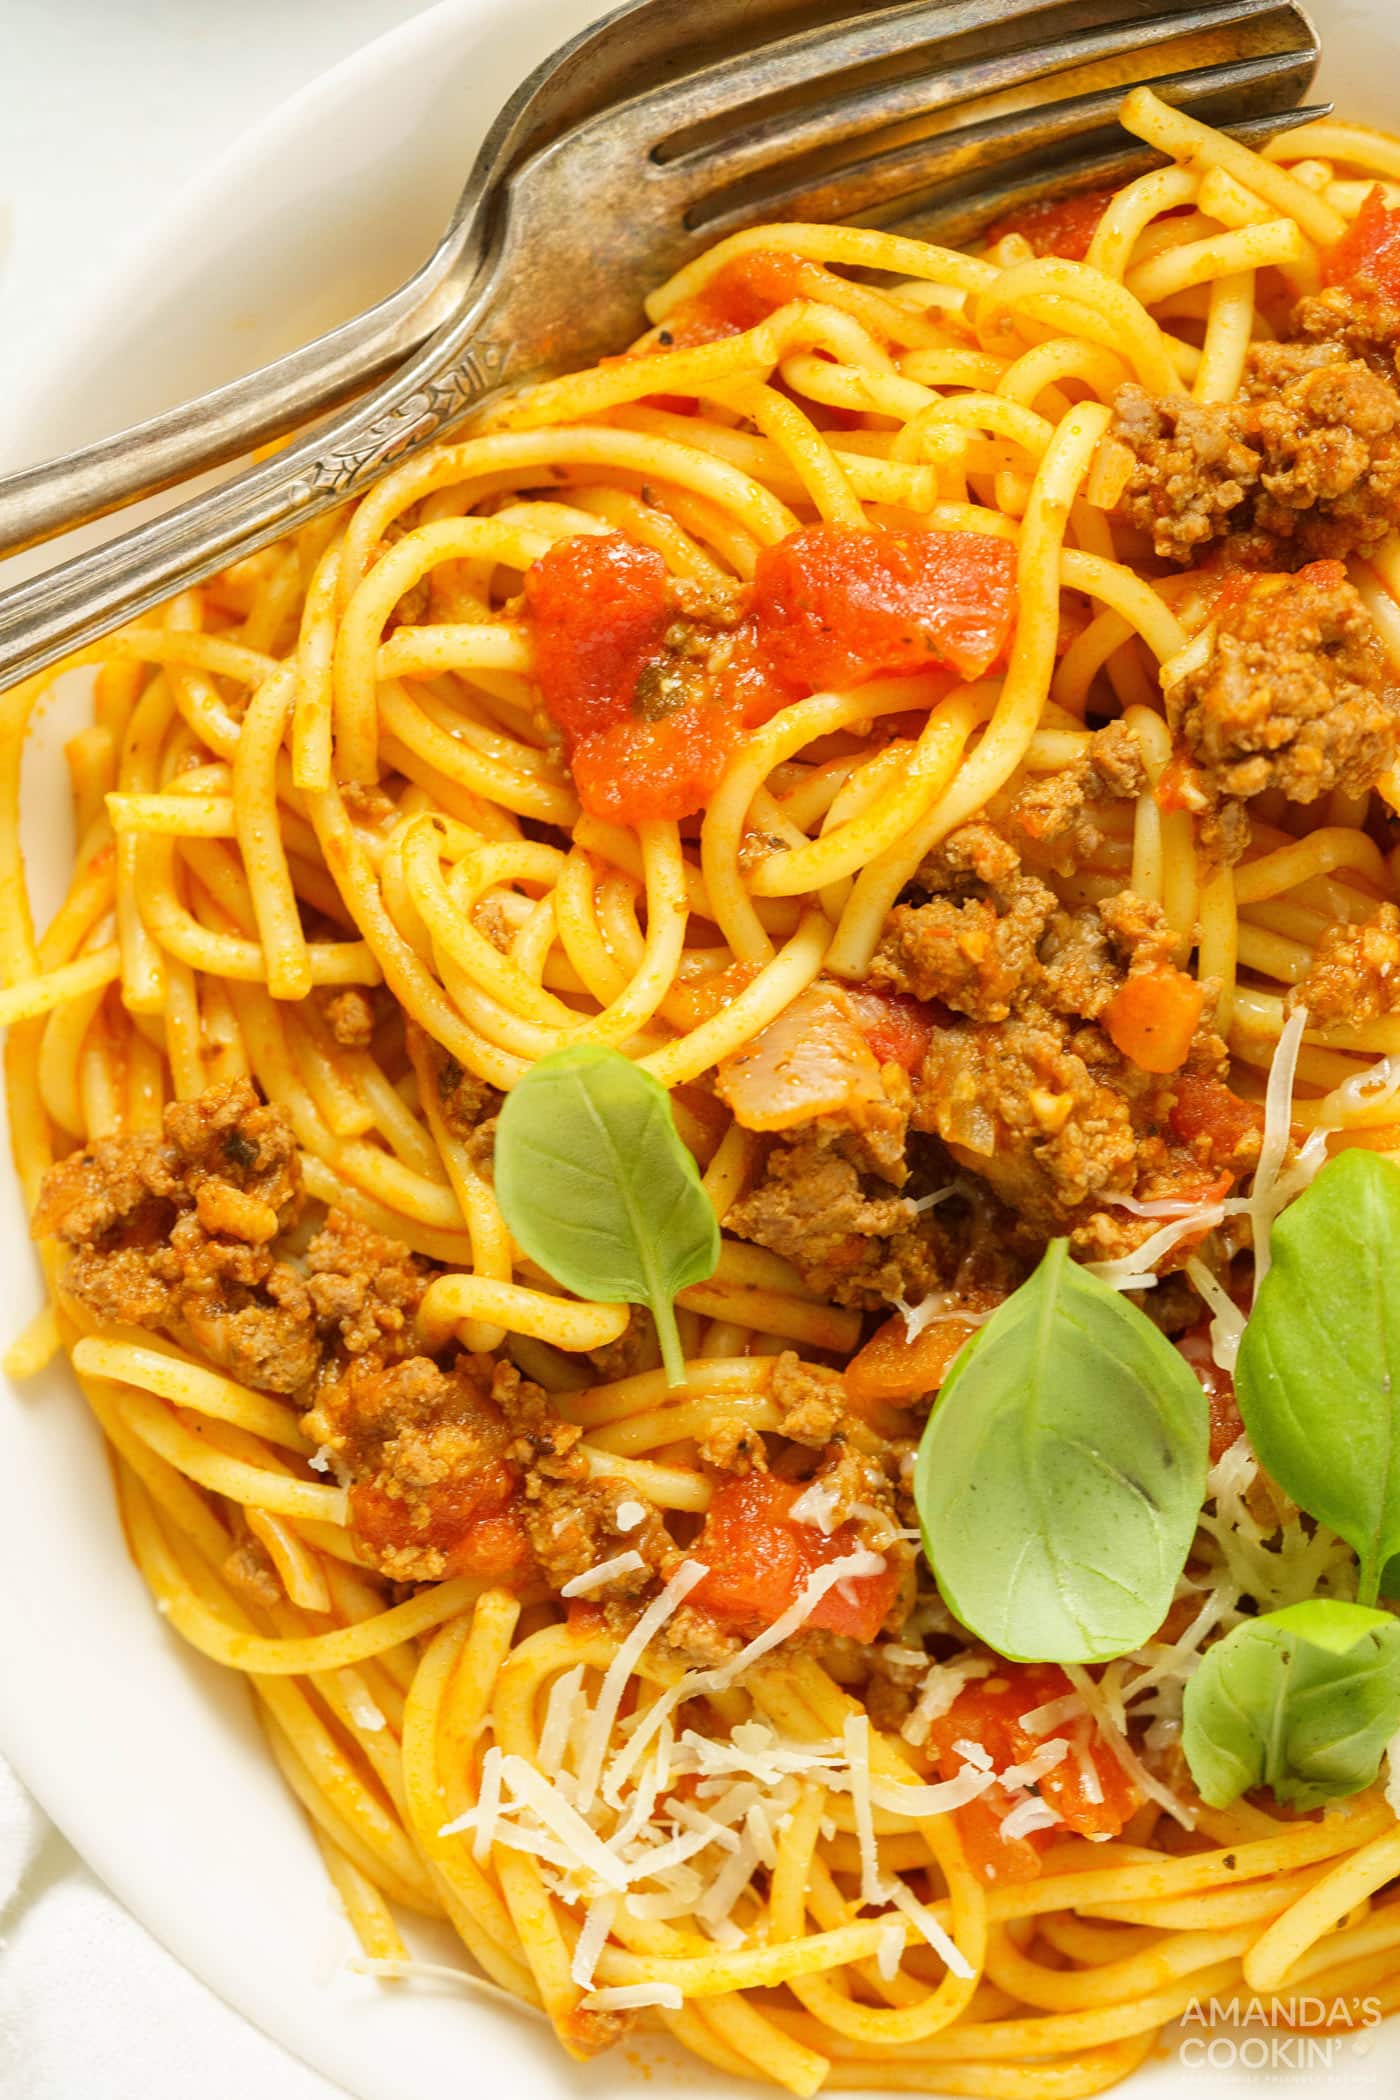 Instant Pot Spaghetti and Meat Sauce - Amanda's Cookin' - Pasta